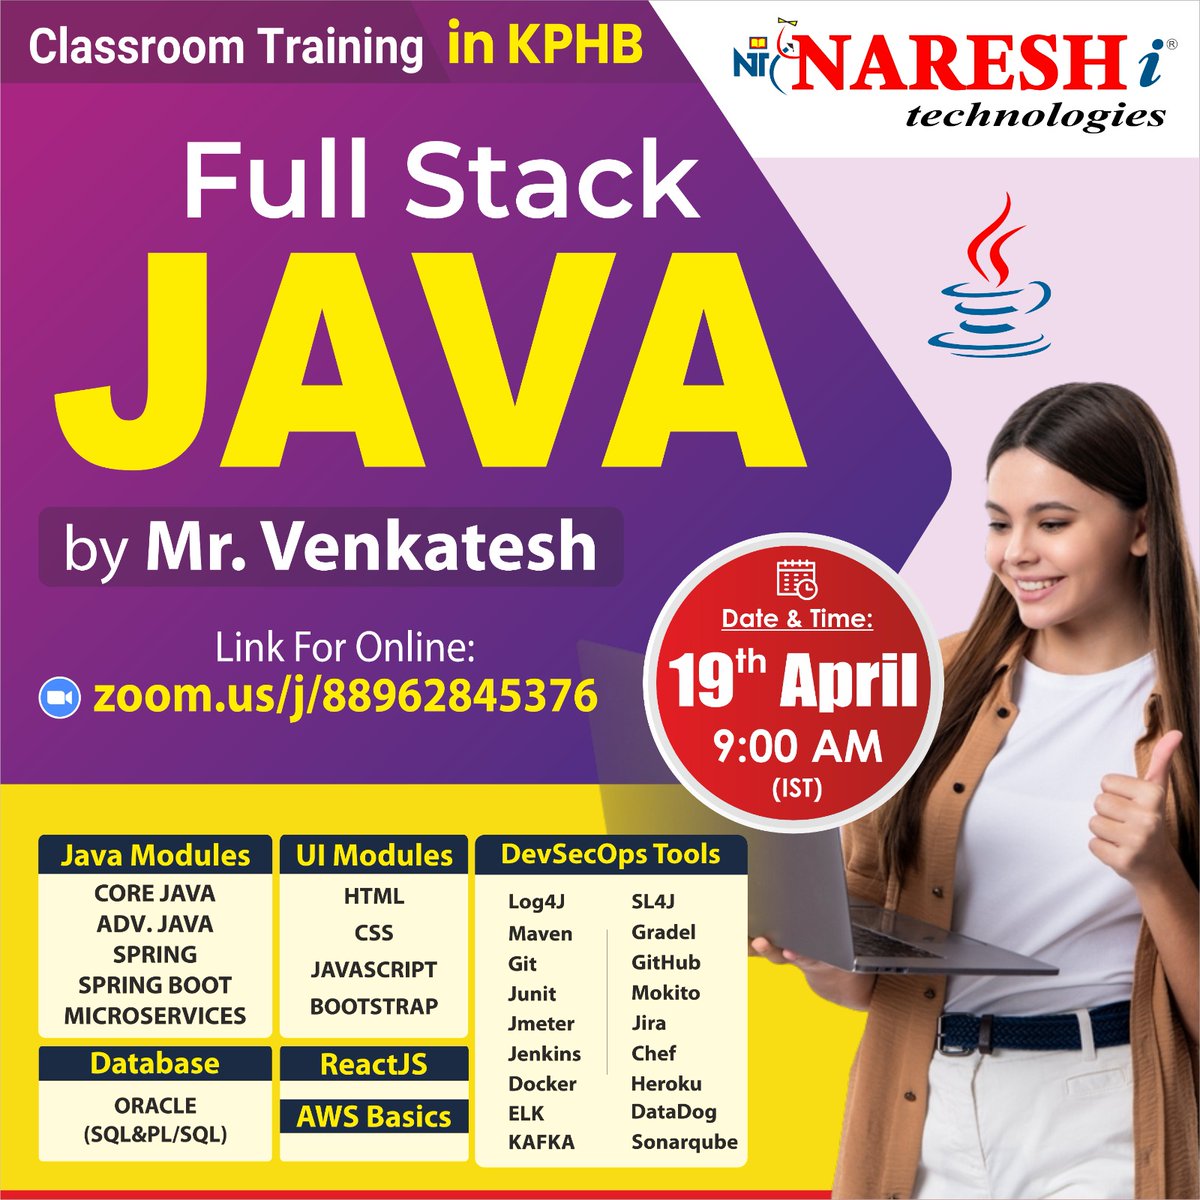 ✍️Enroll Now: bit.ly/3Jj7p9P
👉Attend a Free Demo On Full Stack Java Developer by Mr. Venkatesh
📅Demo On: 19th April @ 9:00 AM (IST)

#java #fullstackjava #onlinejavatraining #nareshit